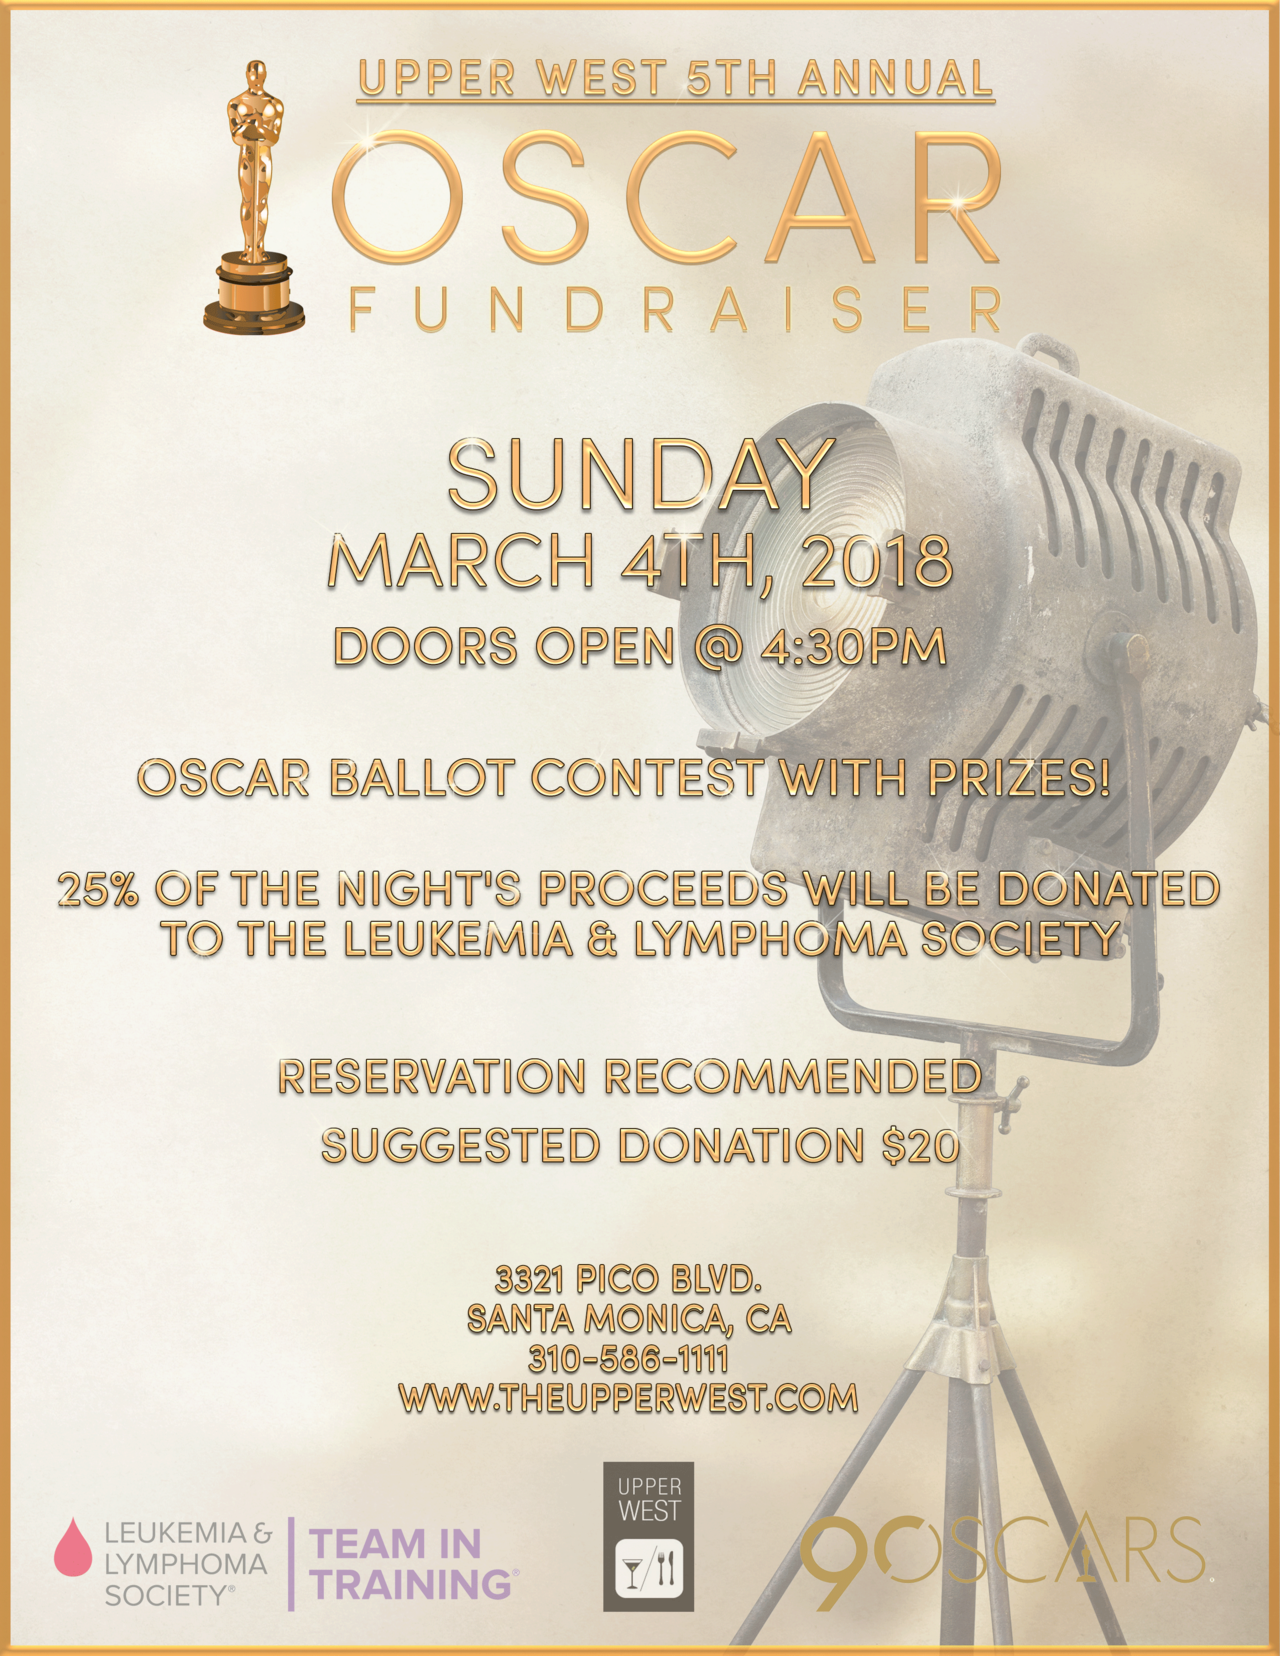 5th Annual Oscar Fundraiser at Upper West